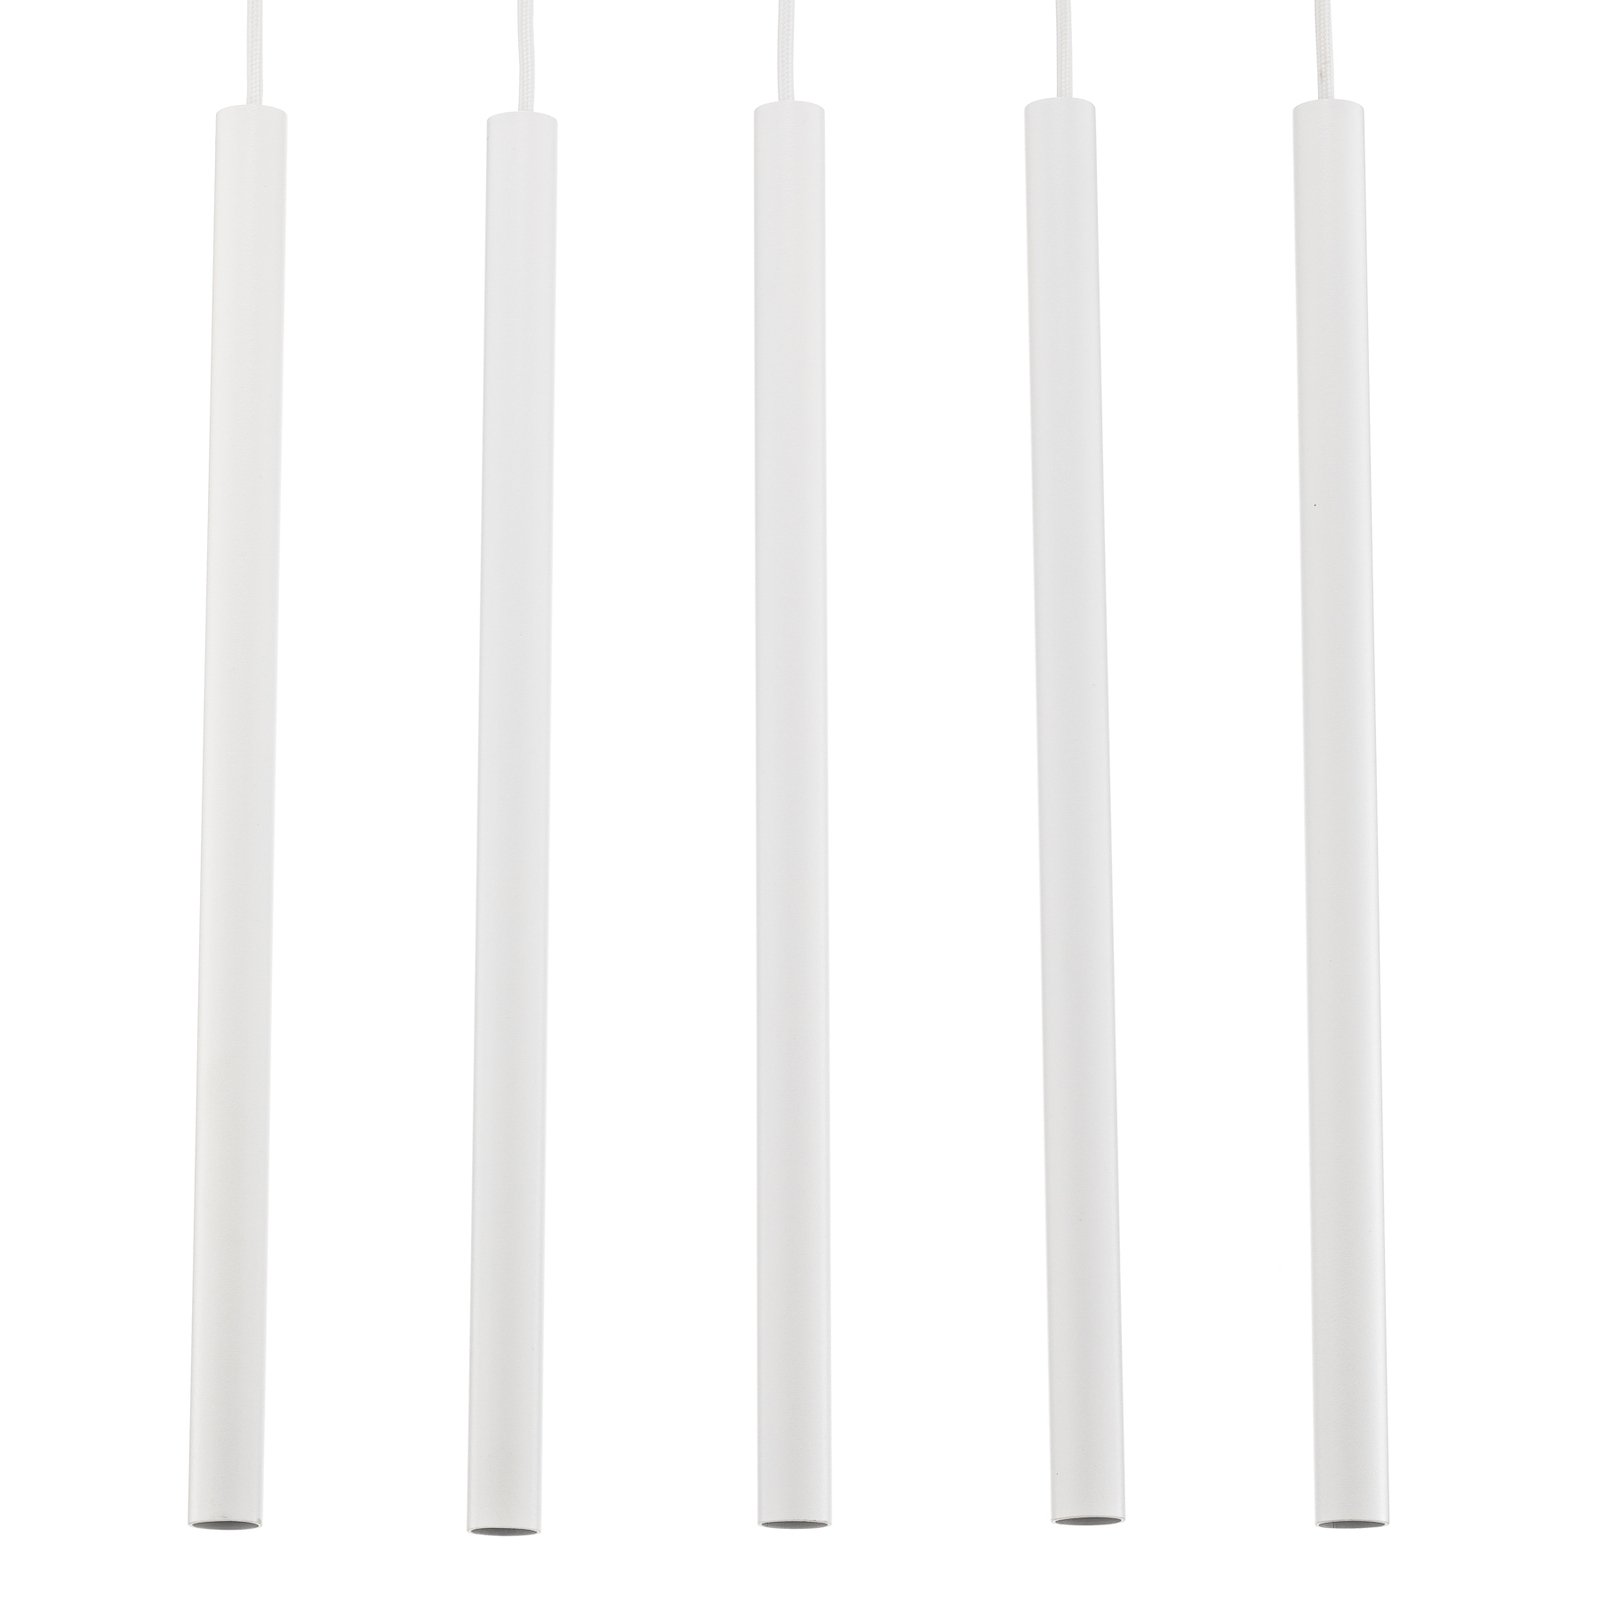 Thin pendant light, white, 5-bulb, linear